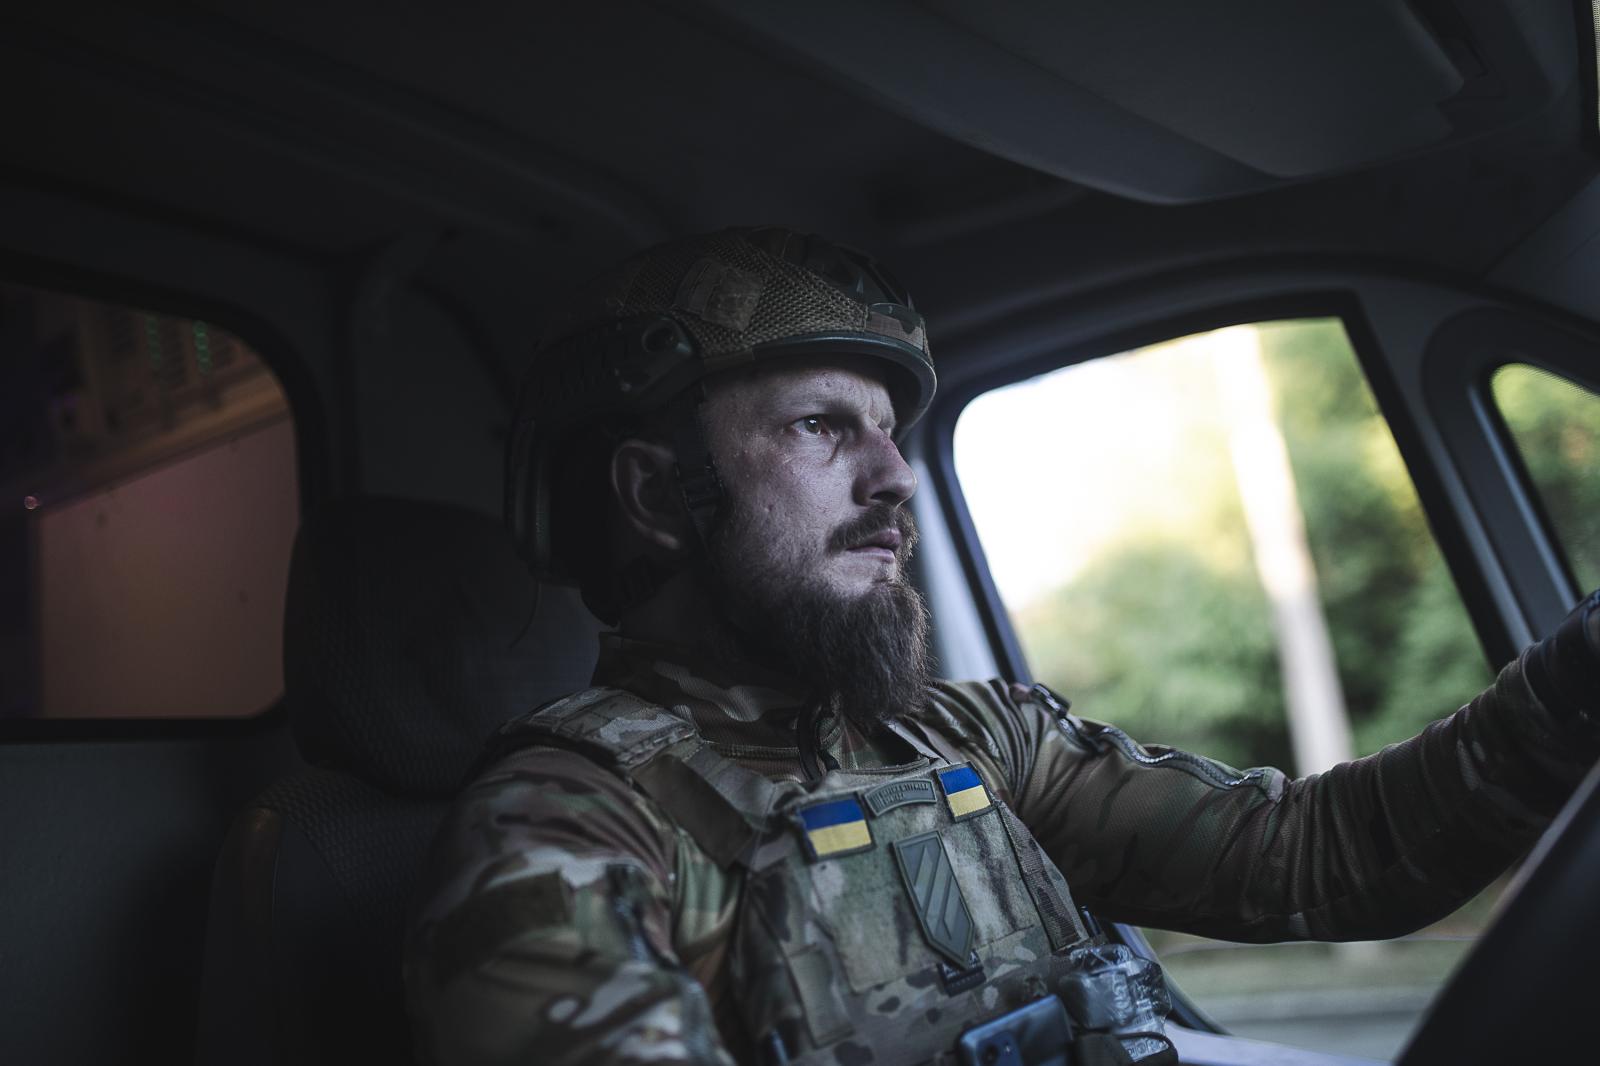 Lifeline - DONBAS, UKRAINE - JULY 11: A driver of a military...